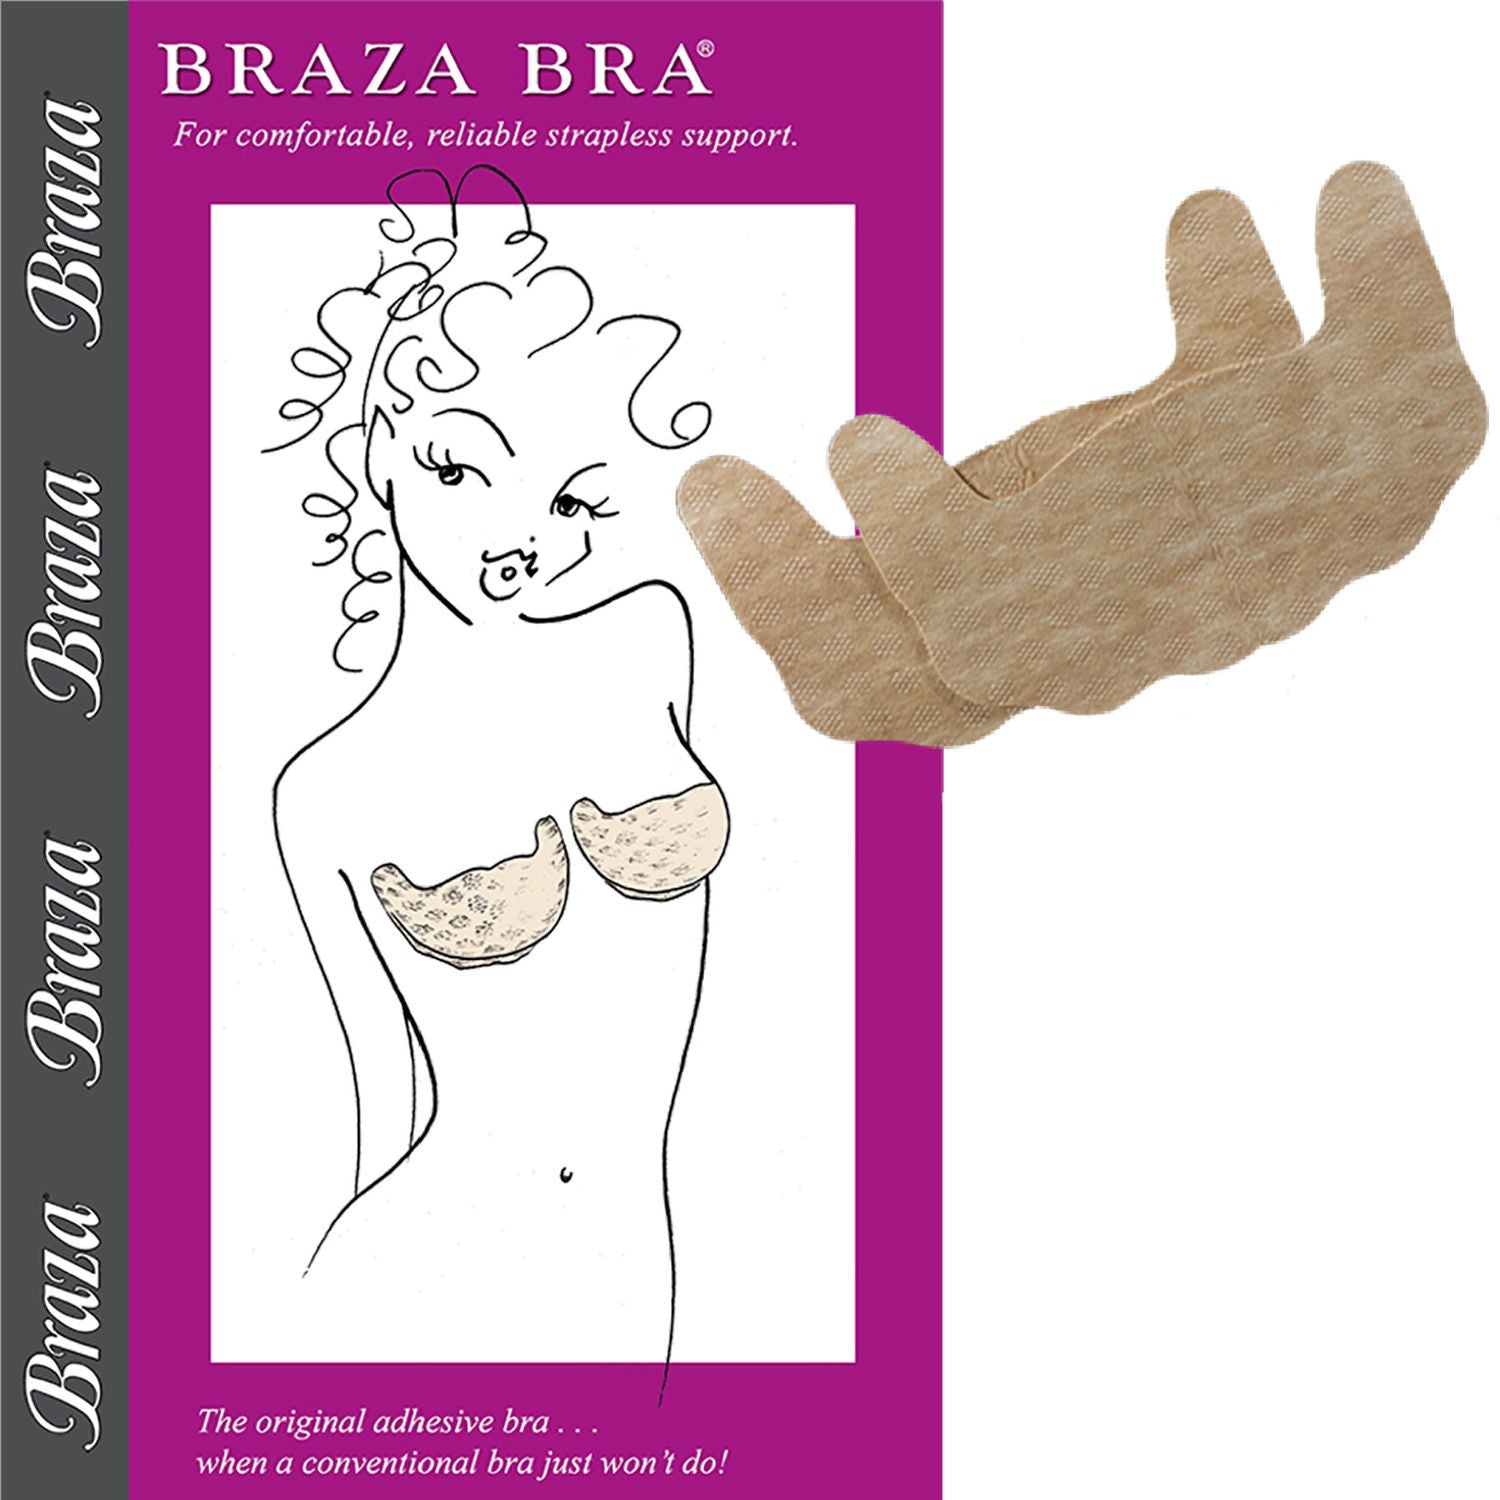 Braza Bra, the original backless, strapless, stick-on bra